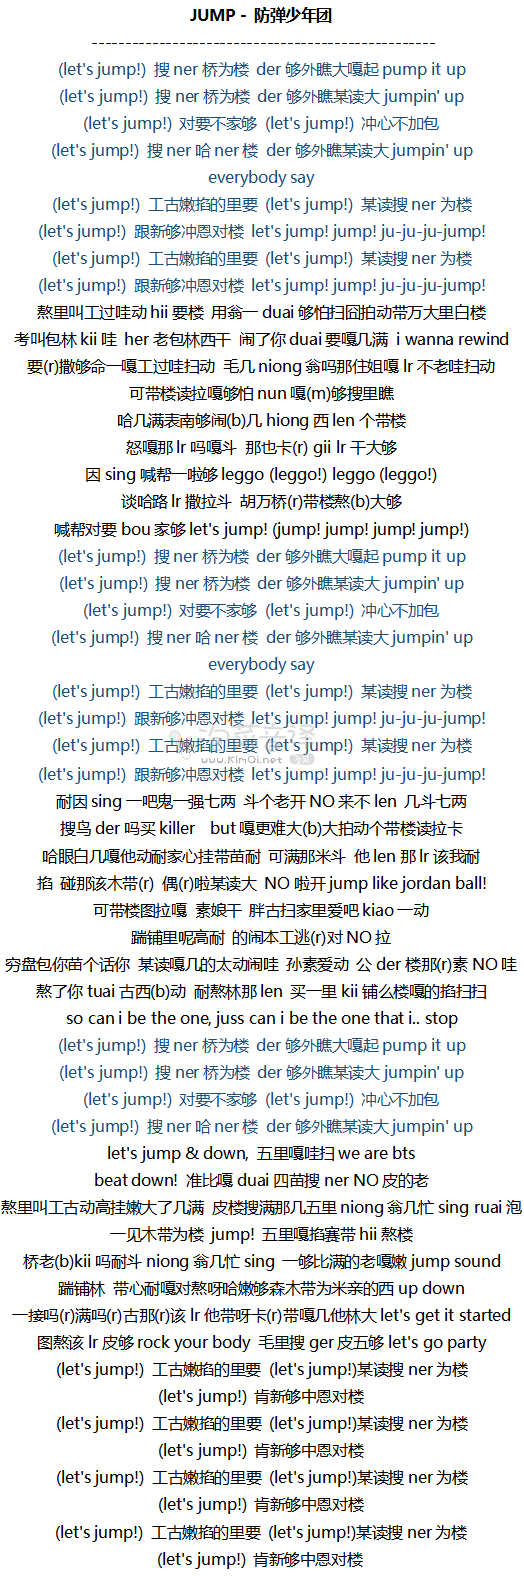 JUMP - 防弹少年团 音译歌词